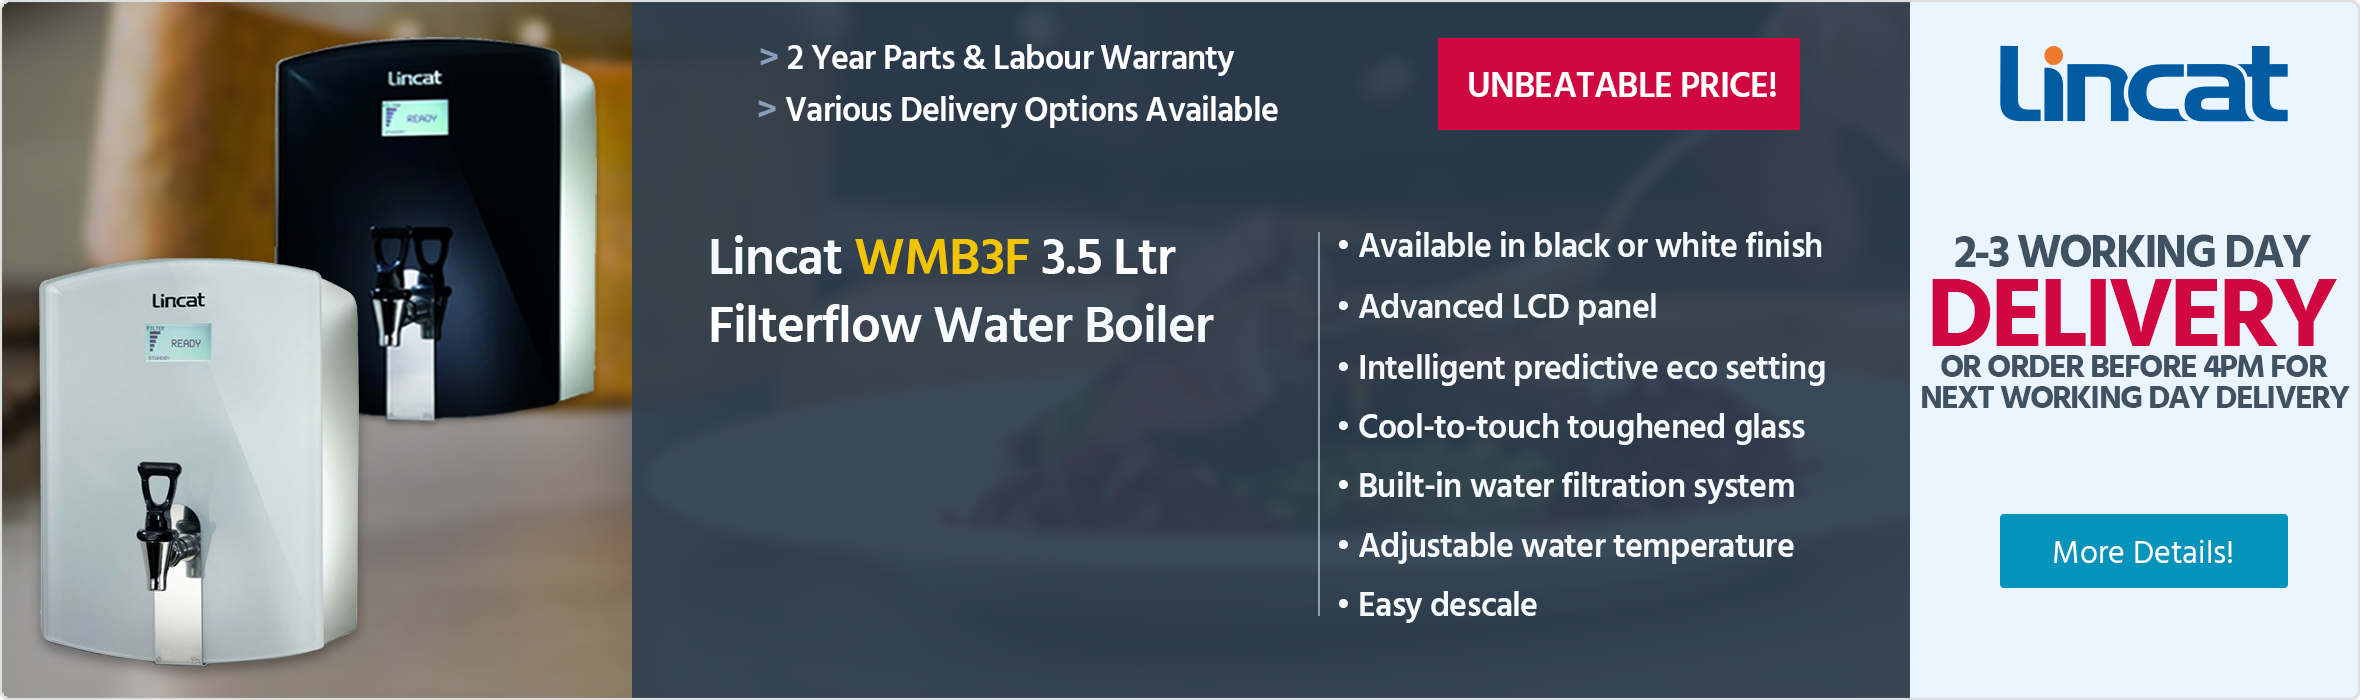 Lincat WMB3F 3.5 Ltr FilterFlow Wall Mounted Boiler